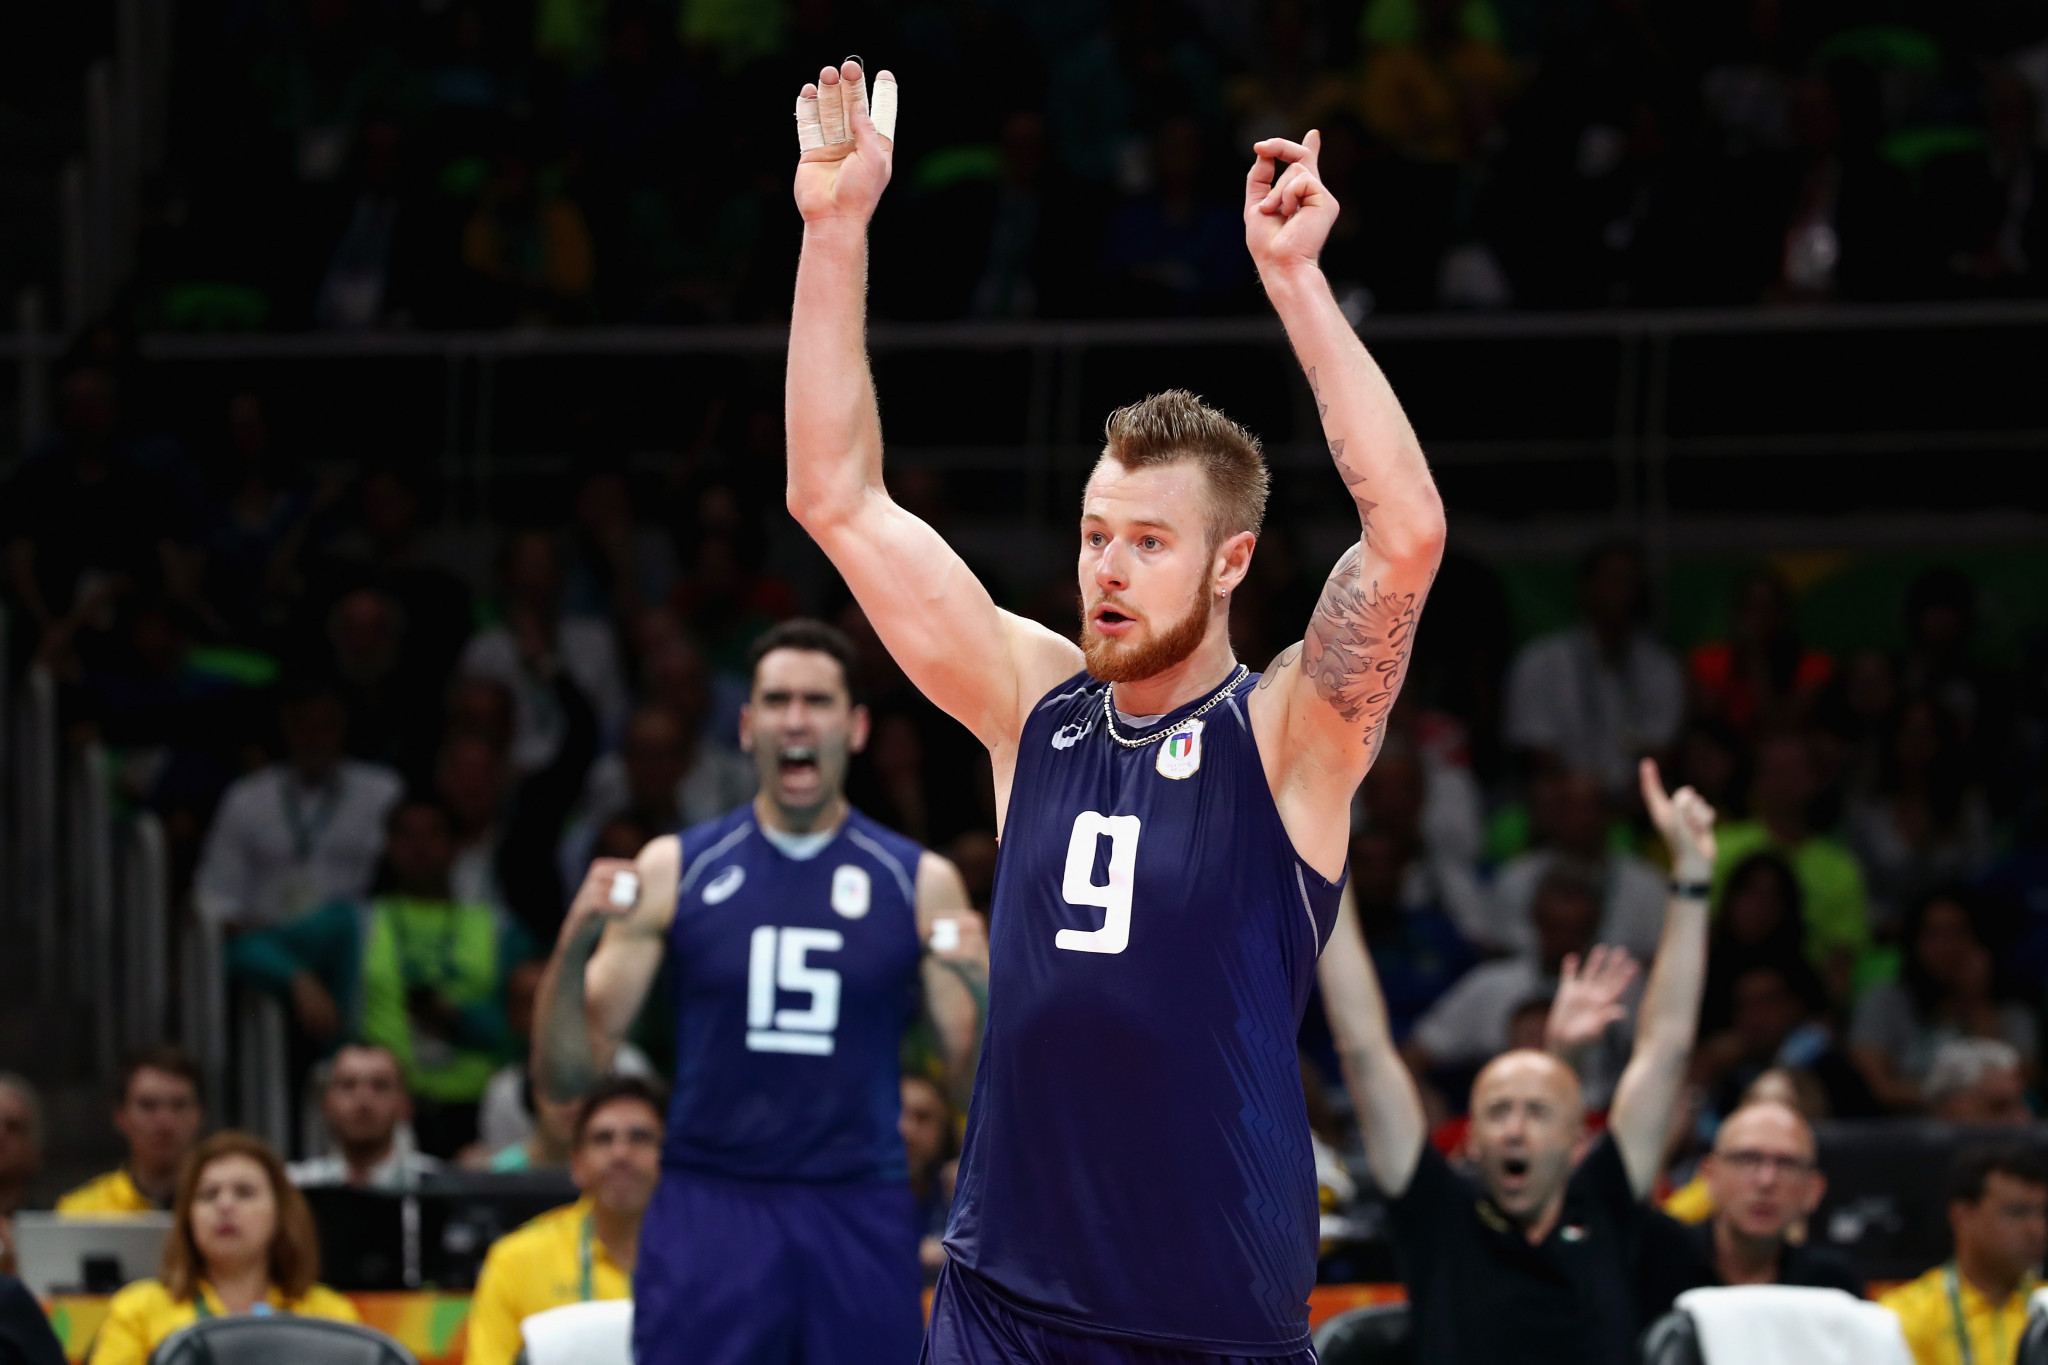 Italian volleyball star Zaytsev to enjoy "breather" after Tokyo 2020 postponement